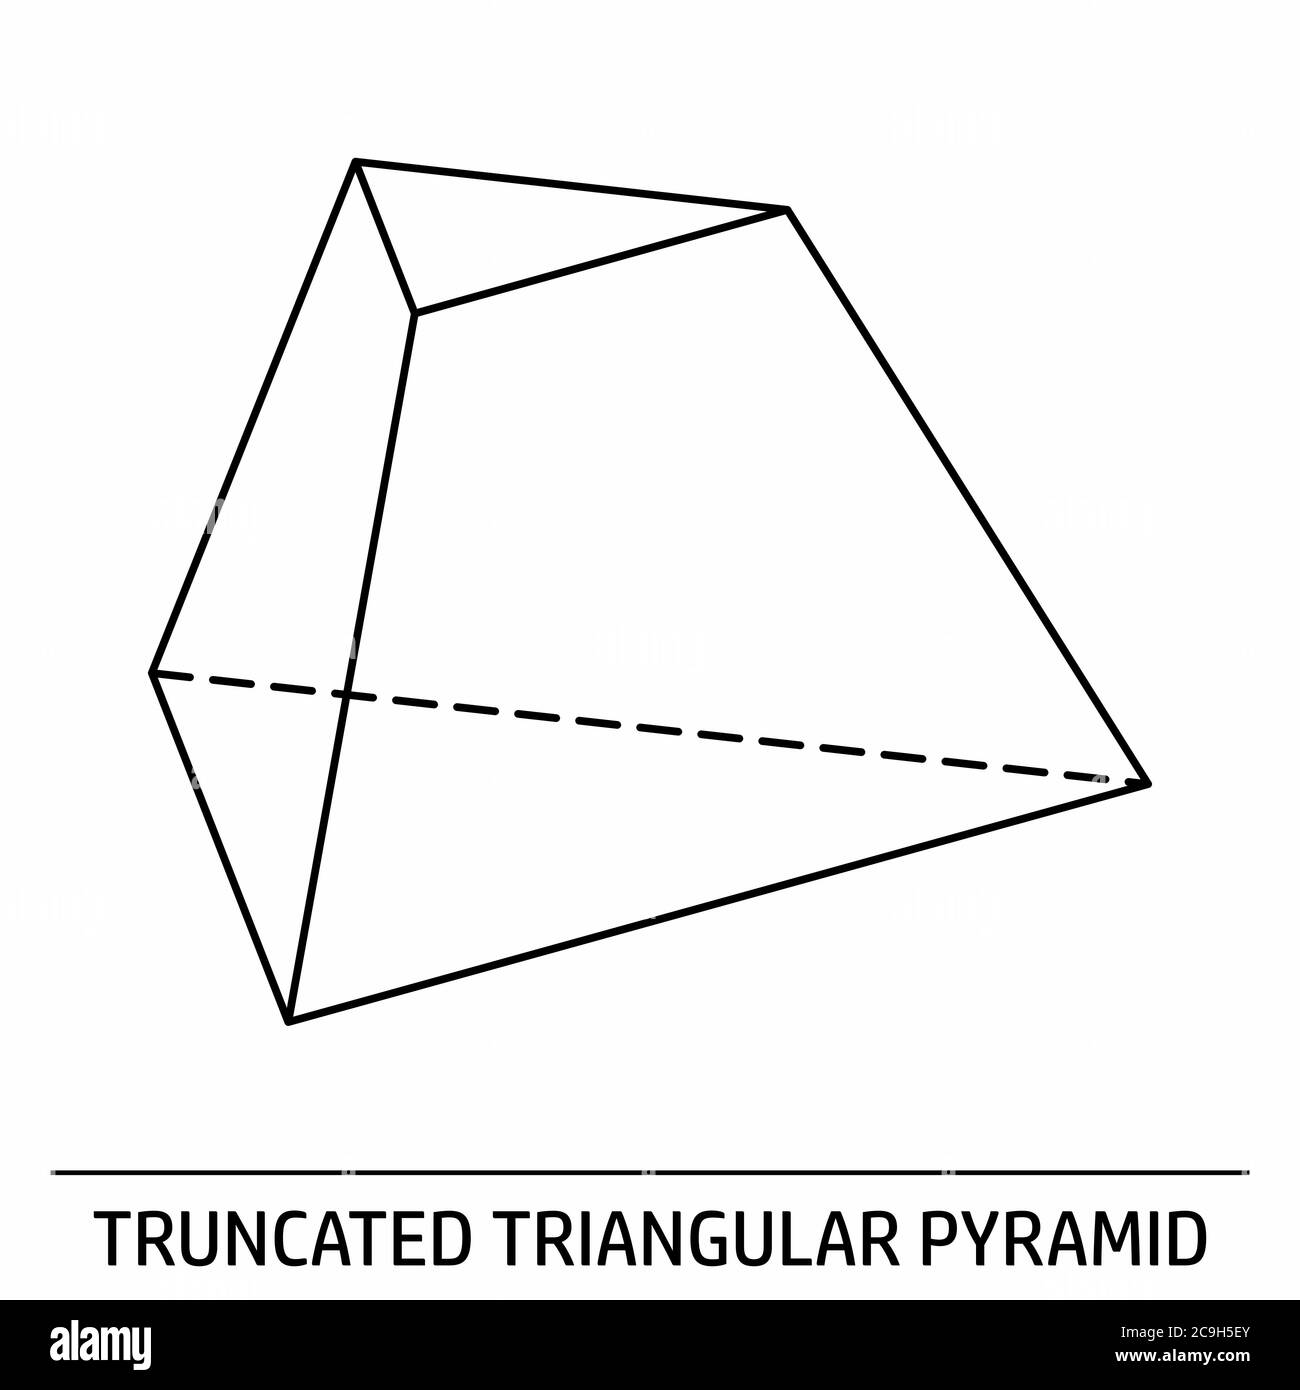 Truncated Triangular Pyramid Stock Vector